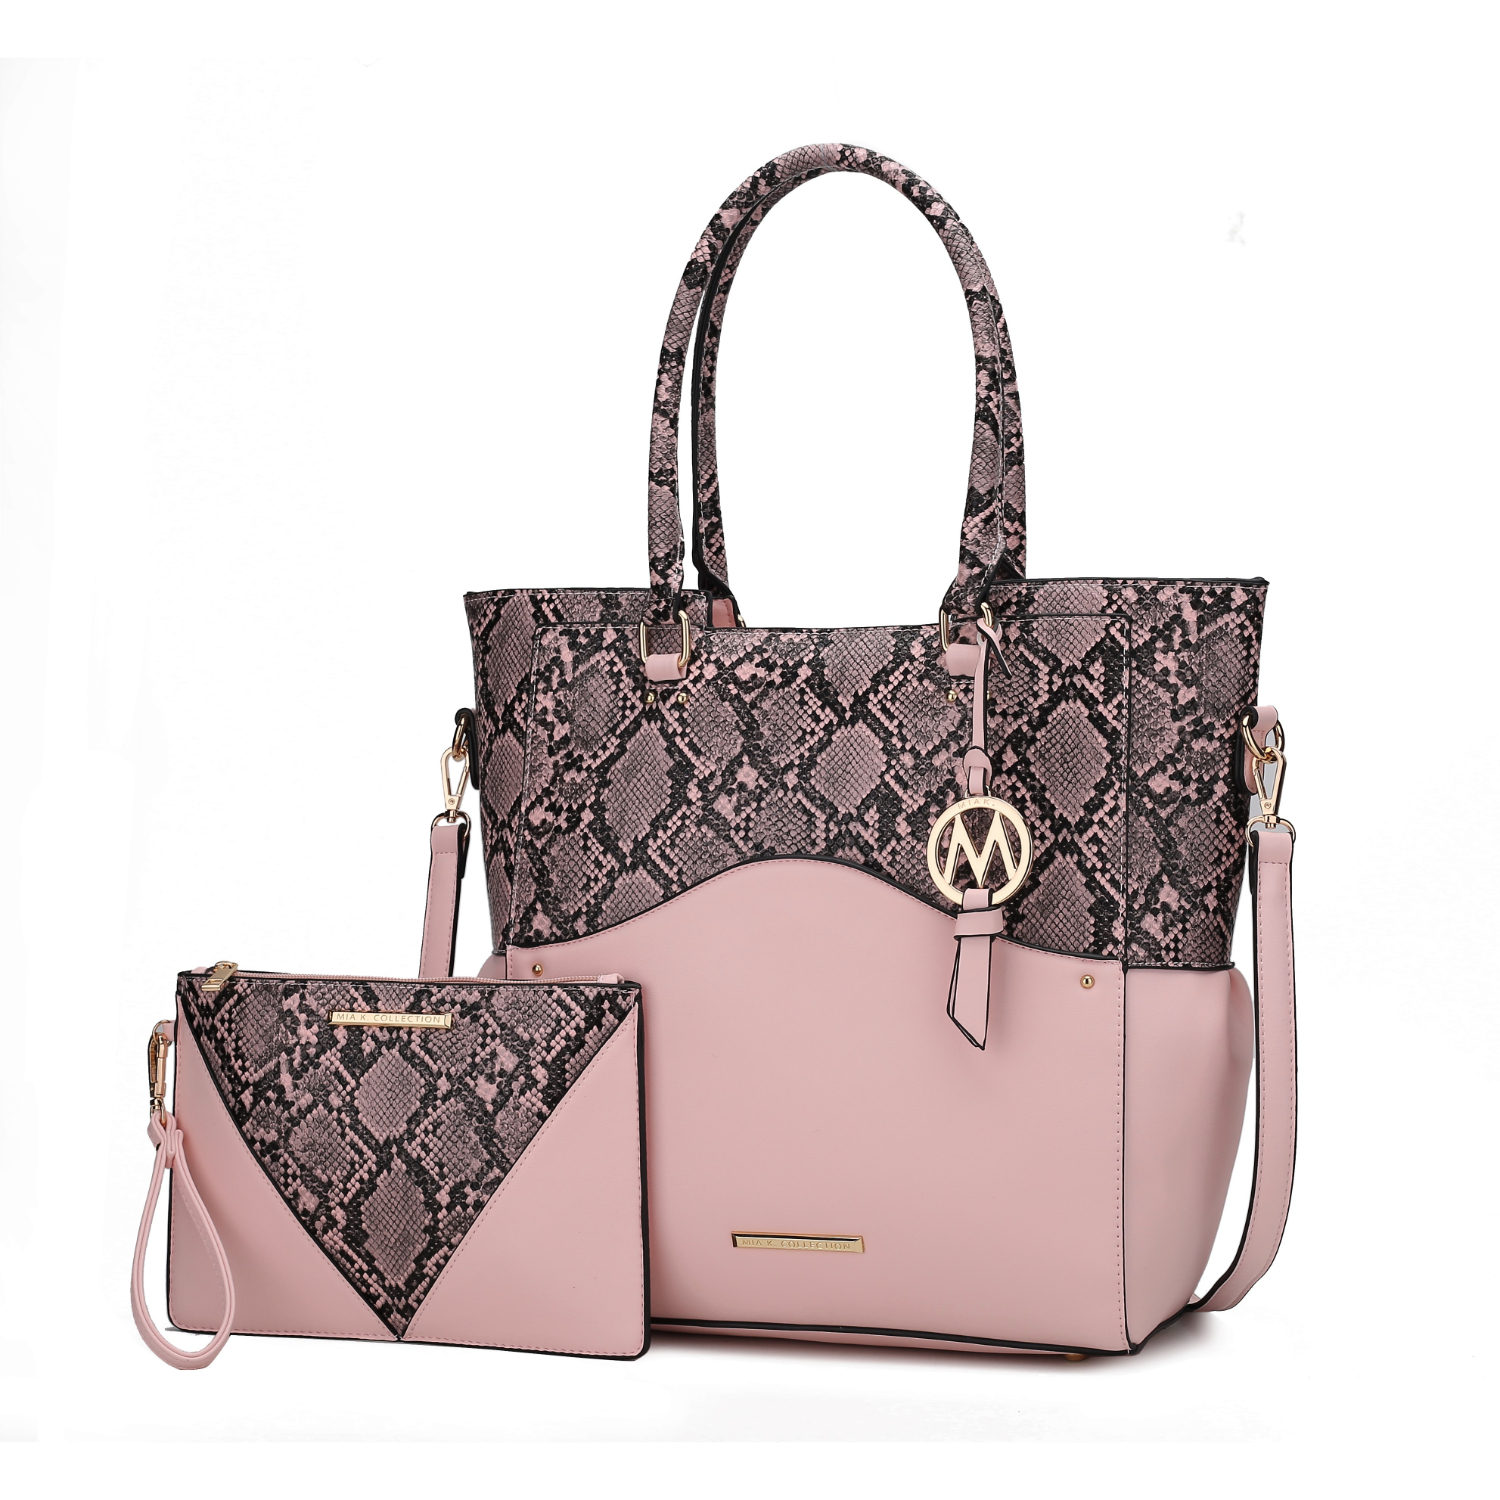 MKF Collection Iris Vegan Leather Tote Handbag By Mia K. - Blush Pink